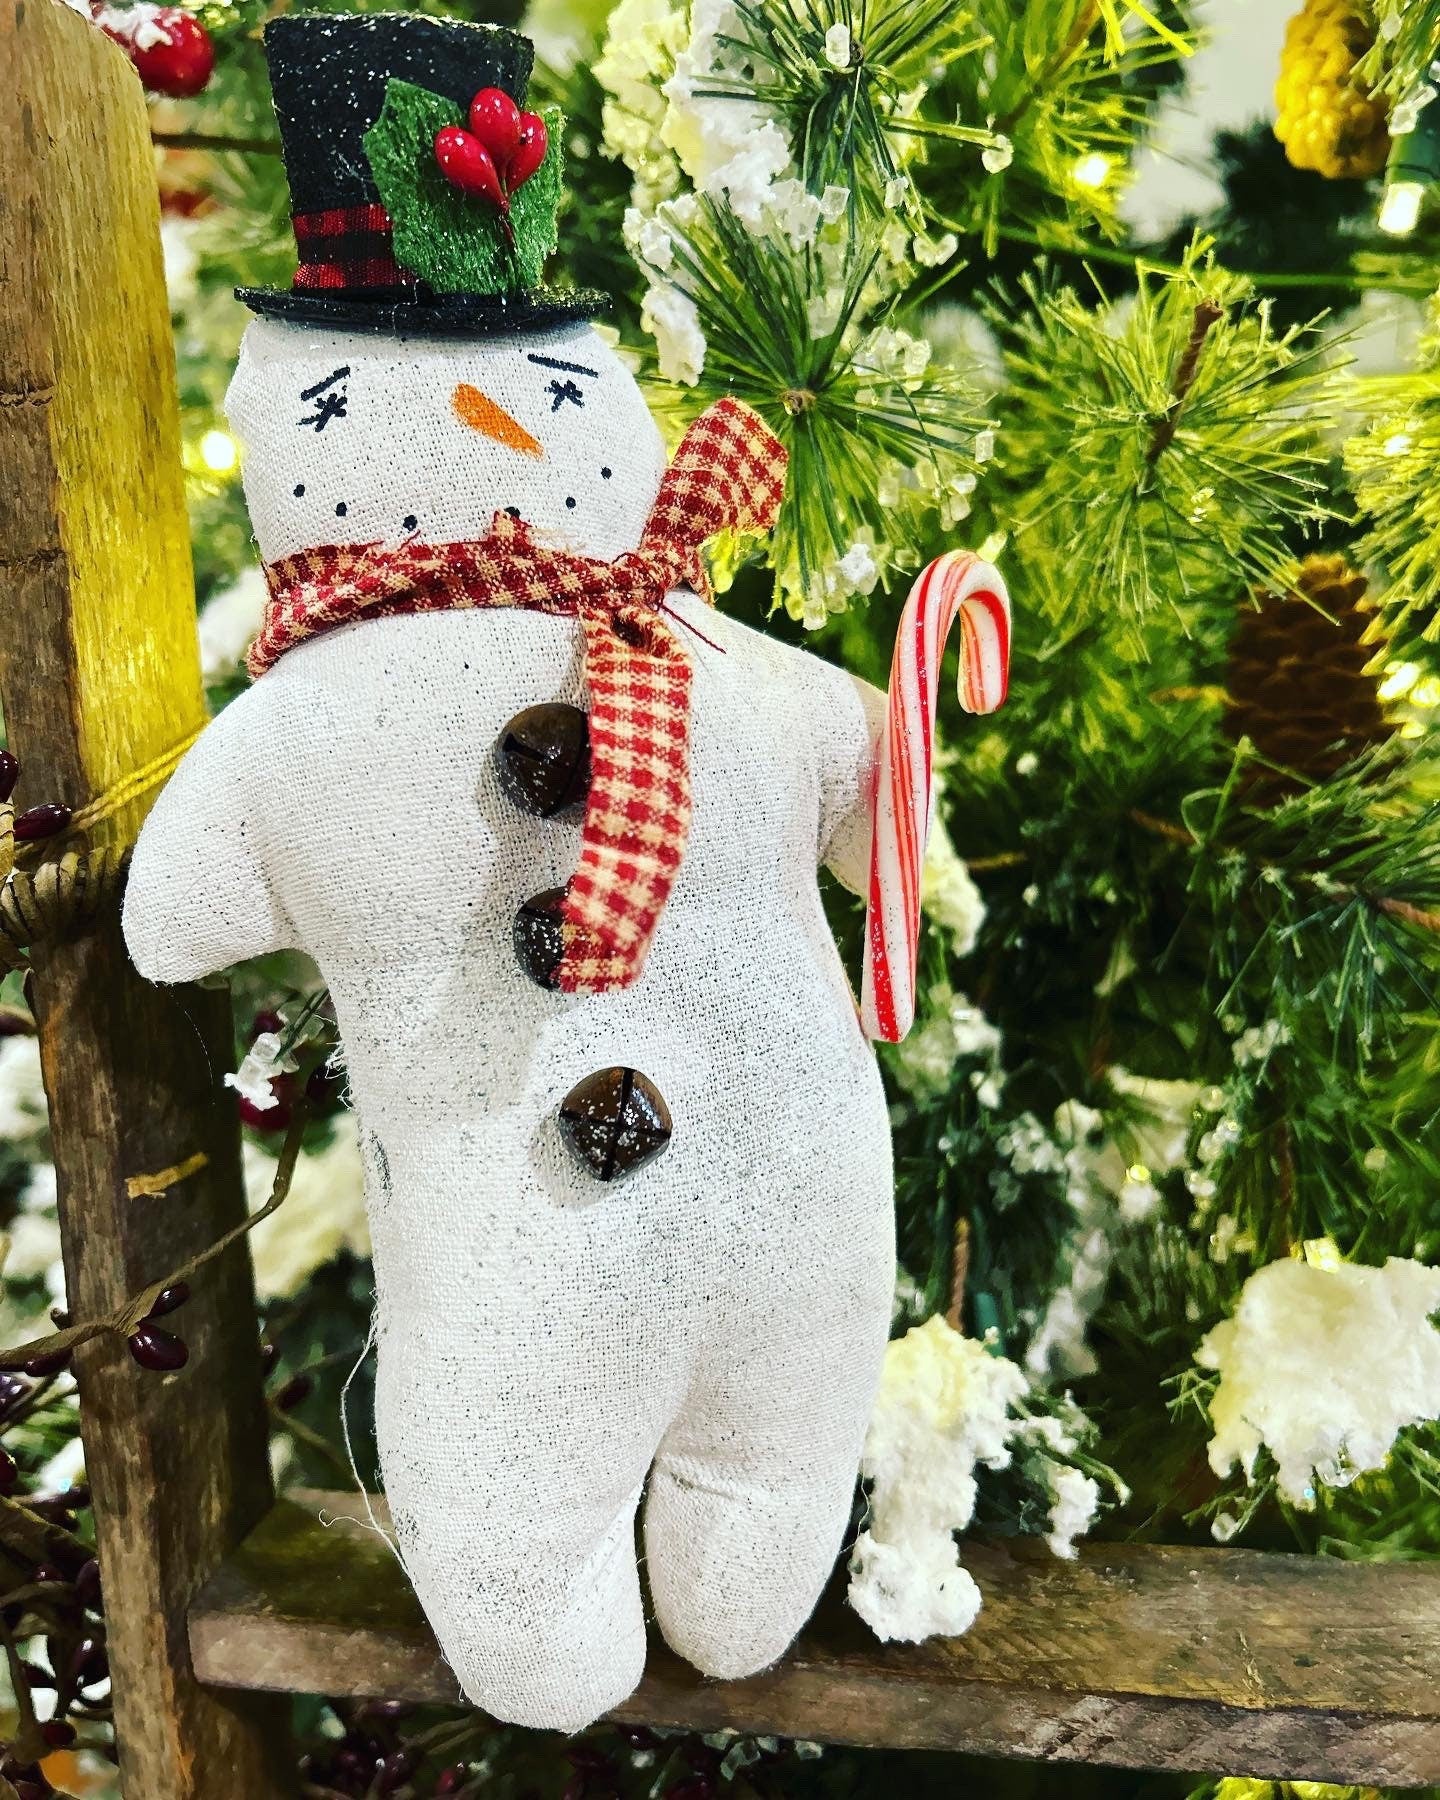 Primitive Handmade Snowman Doll, Primitive Winter Decor, Snowmen ornies, Christmas Snowmen Decor, tiered tray decor